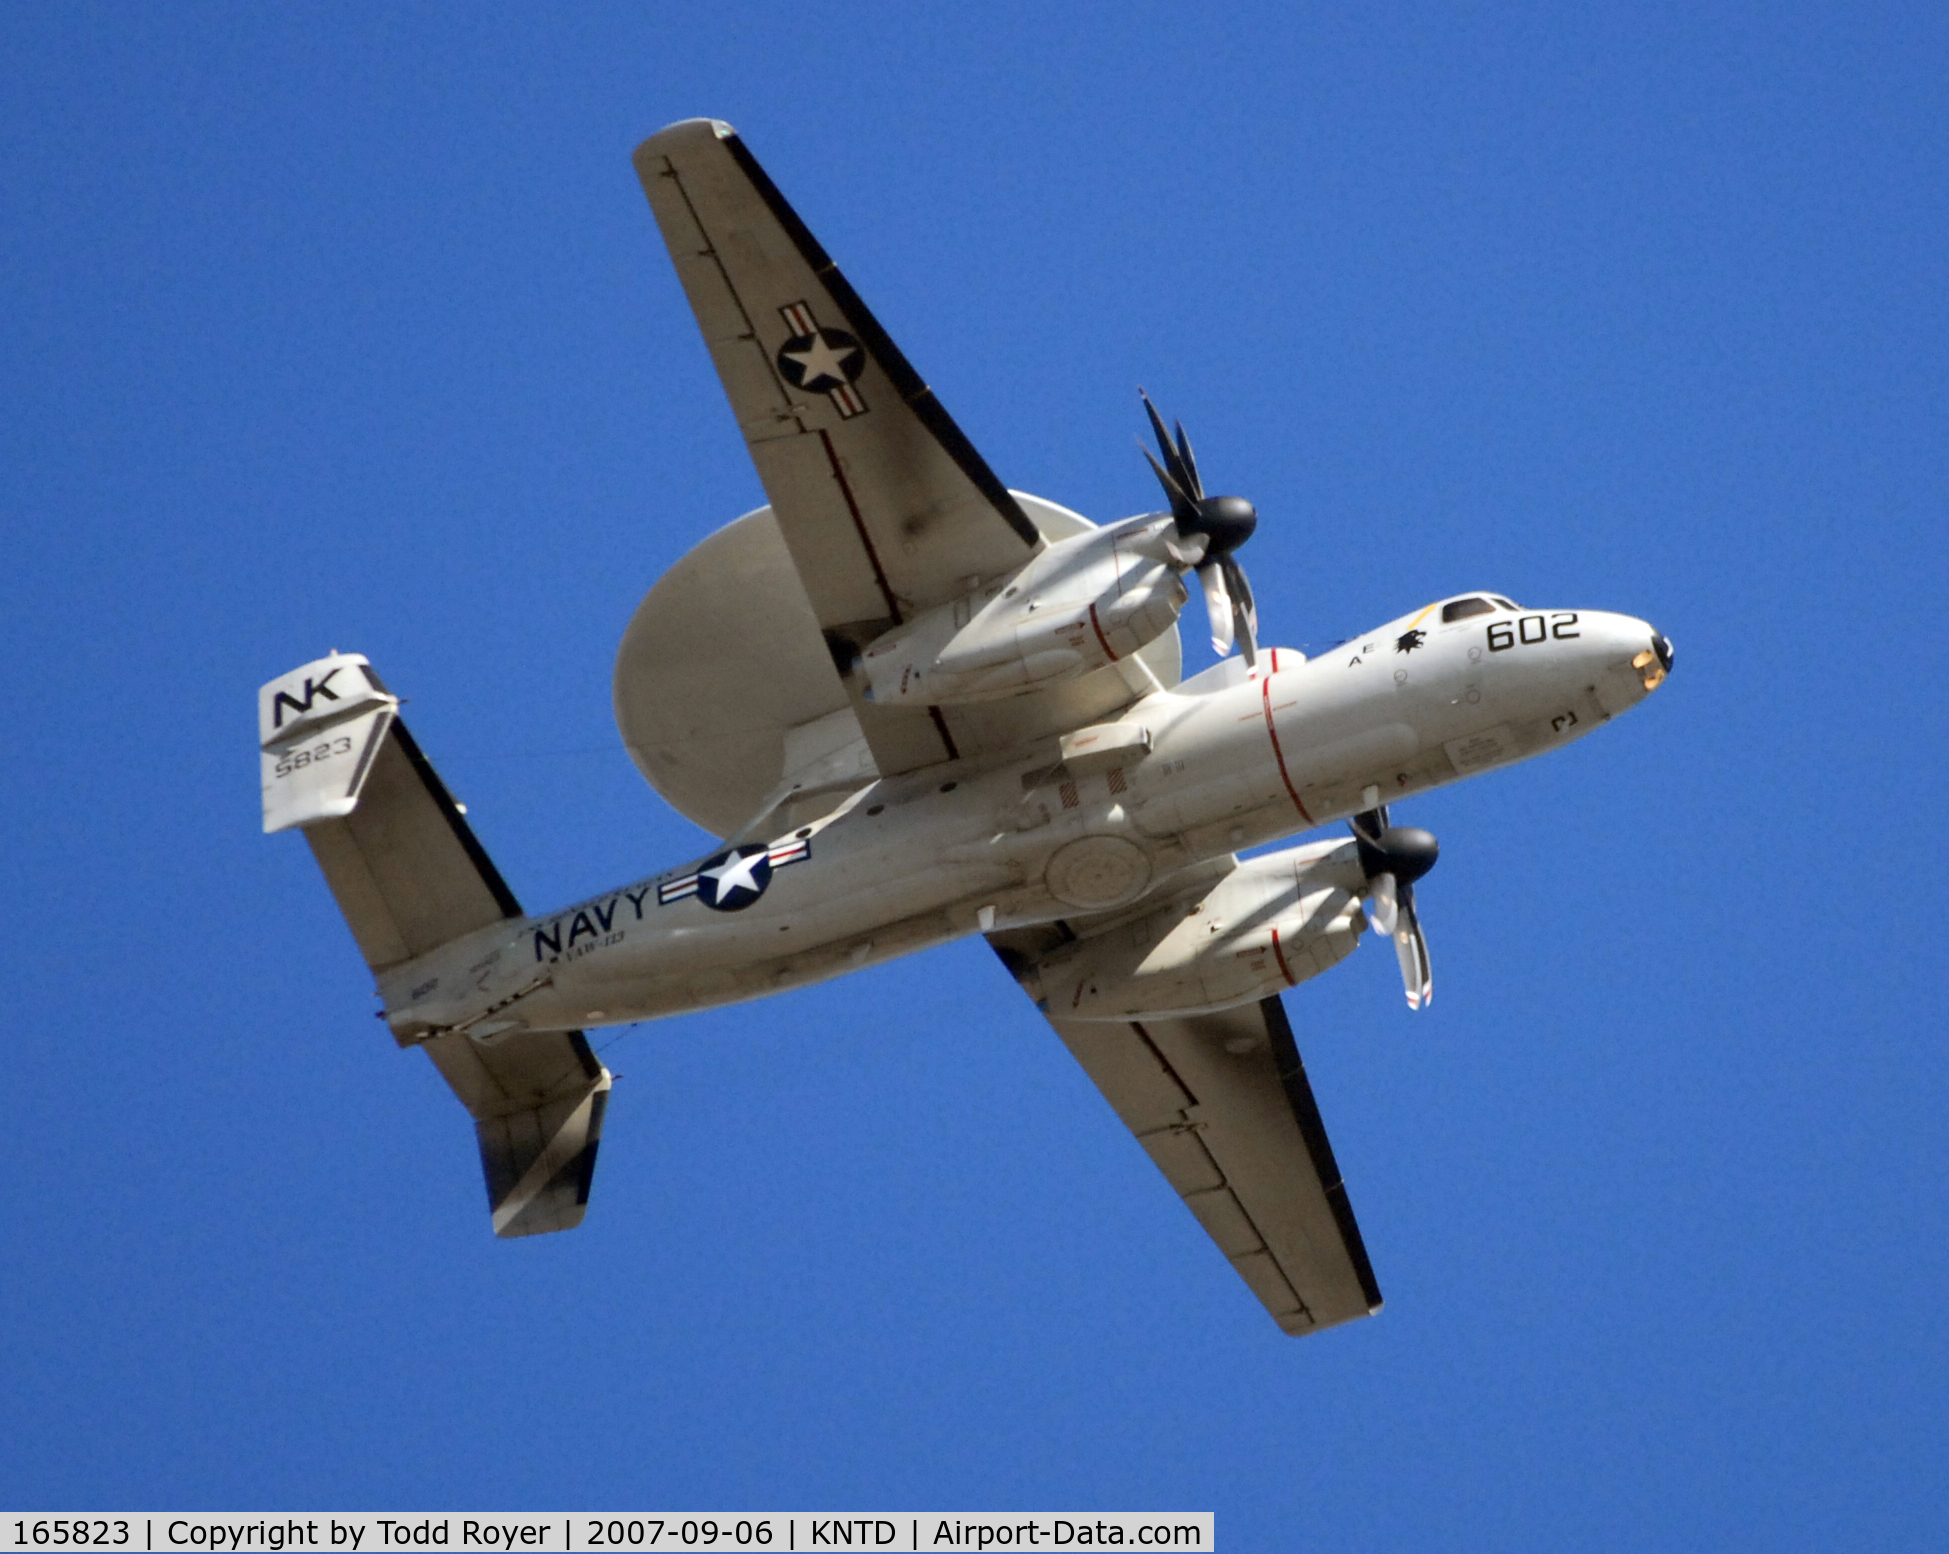 165823, Northrop Grumman E-2C Hawkeye C/N A194, From the backyard